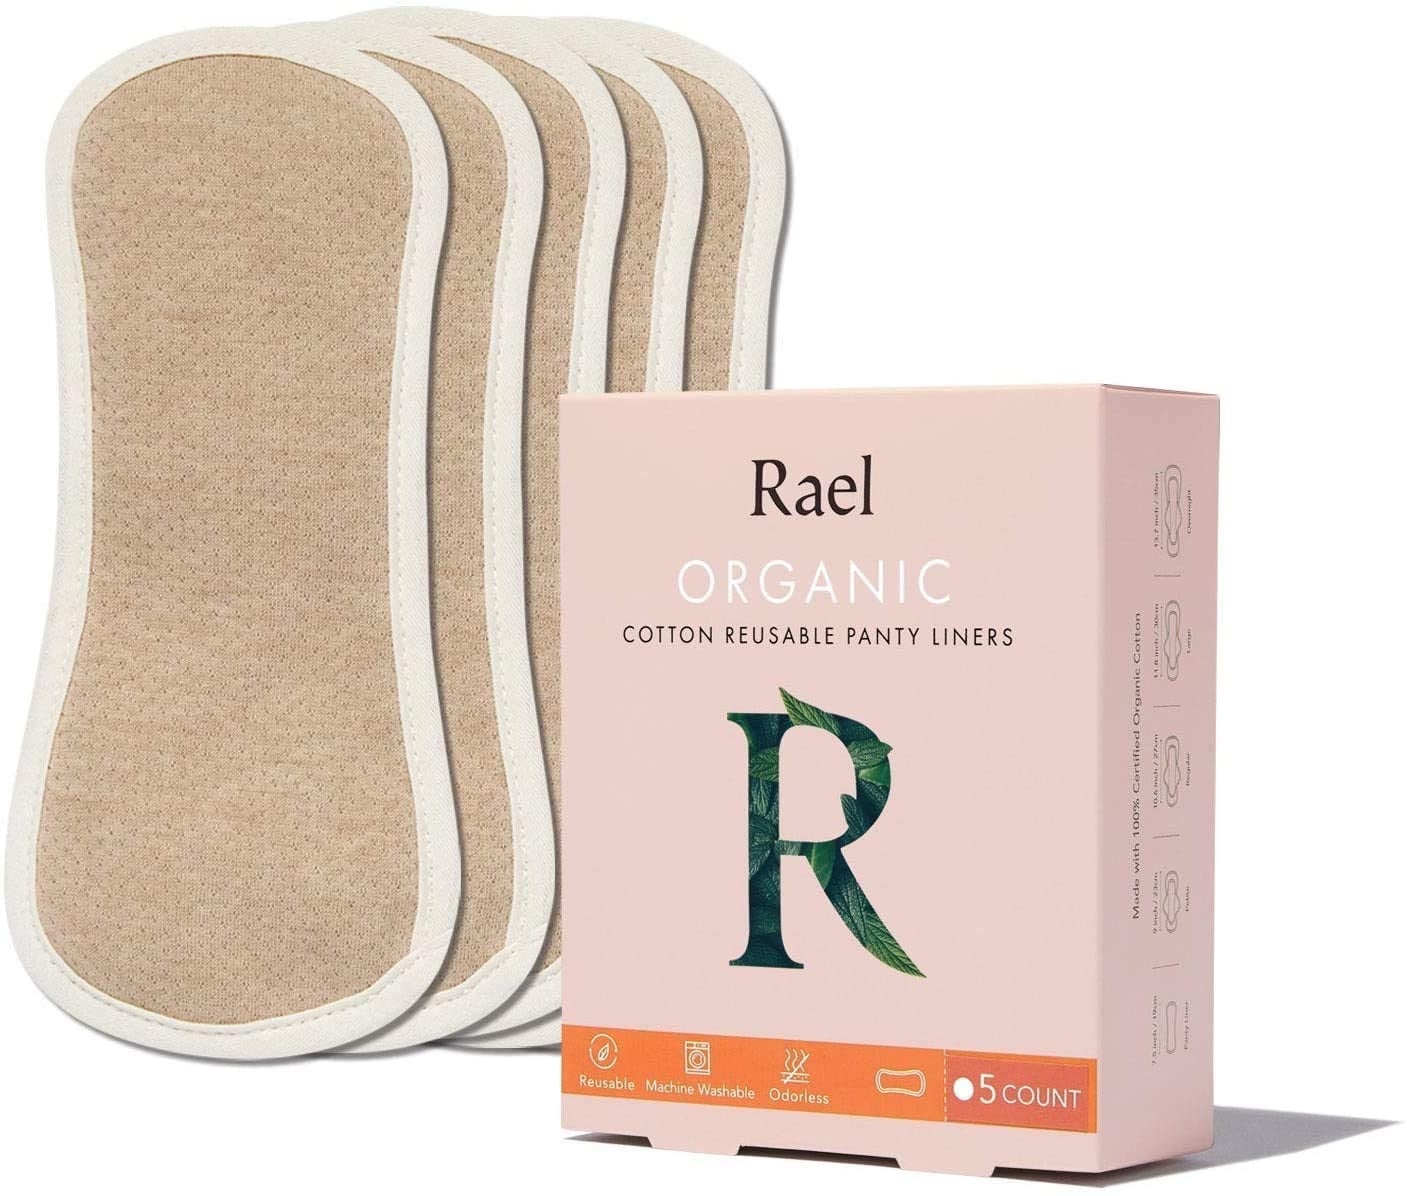 Rael Reusable Period Underwear